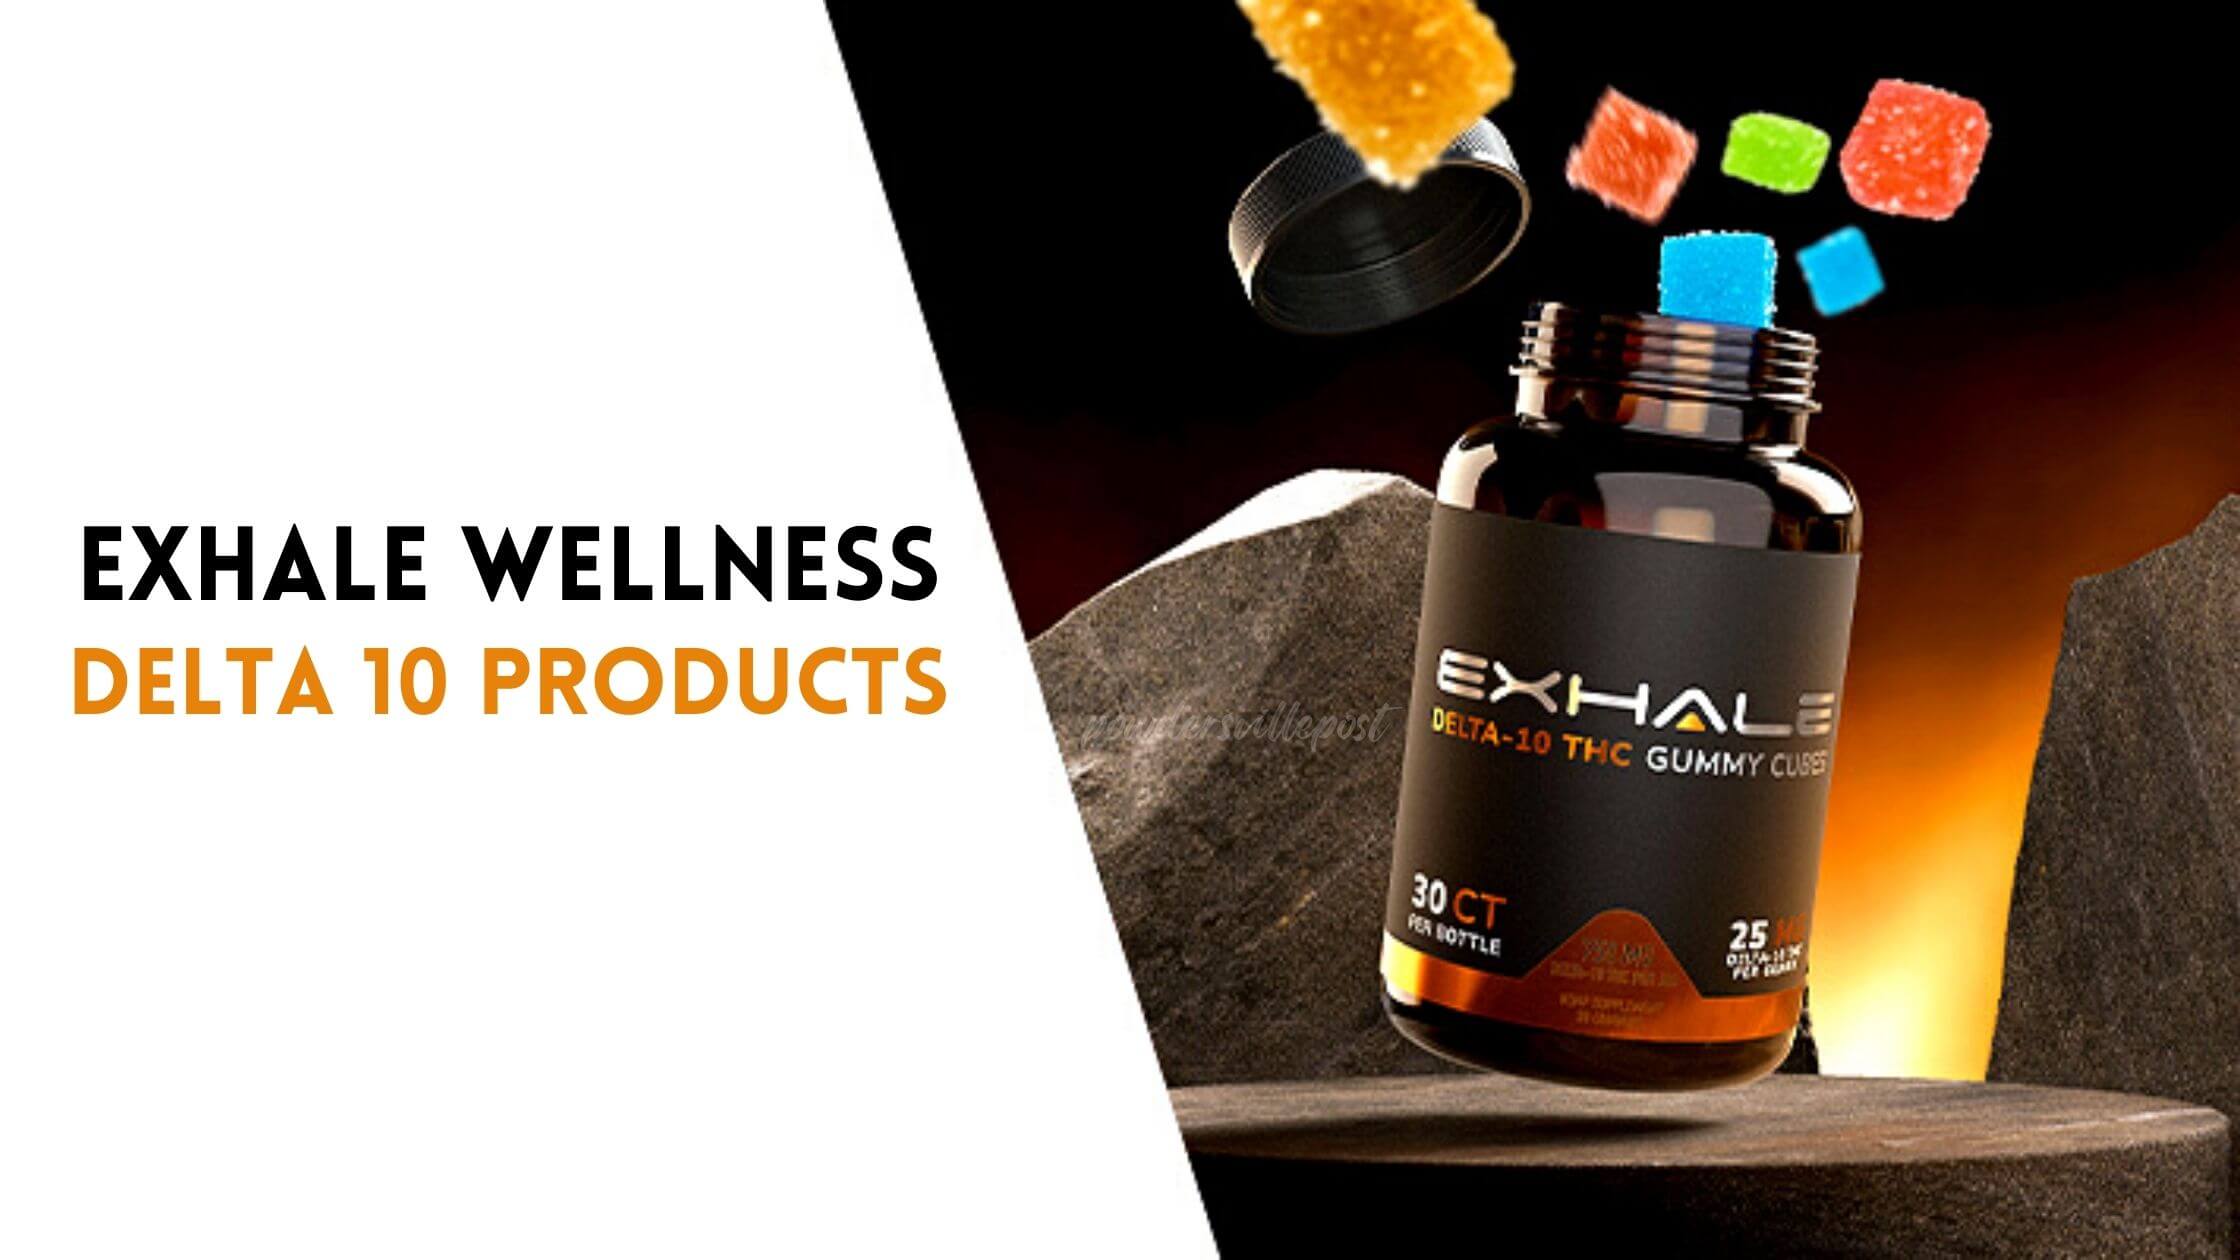 Exhale Wellness Delta 10 THC Gummy Cubes